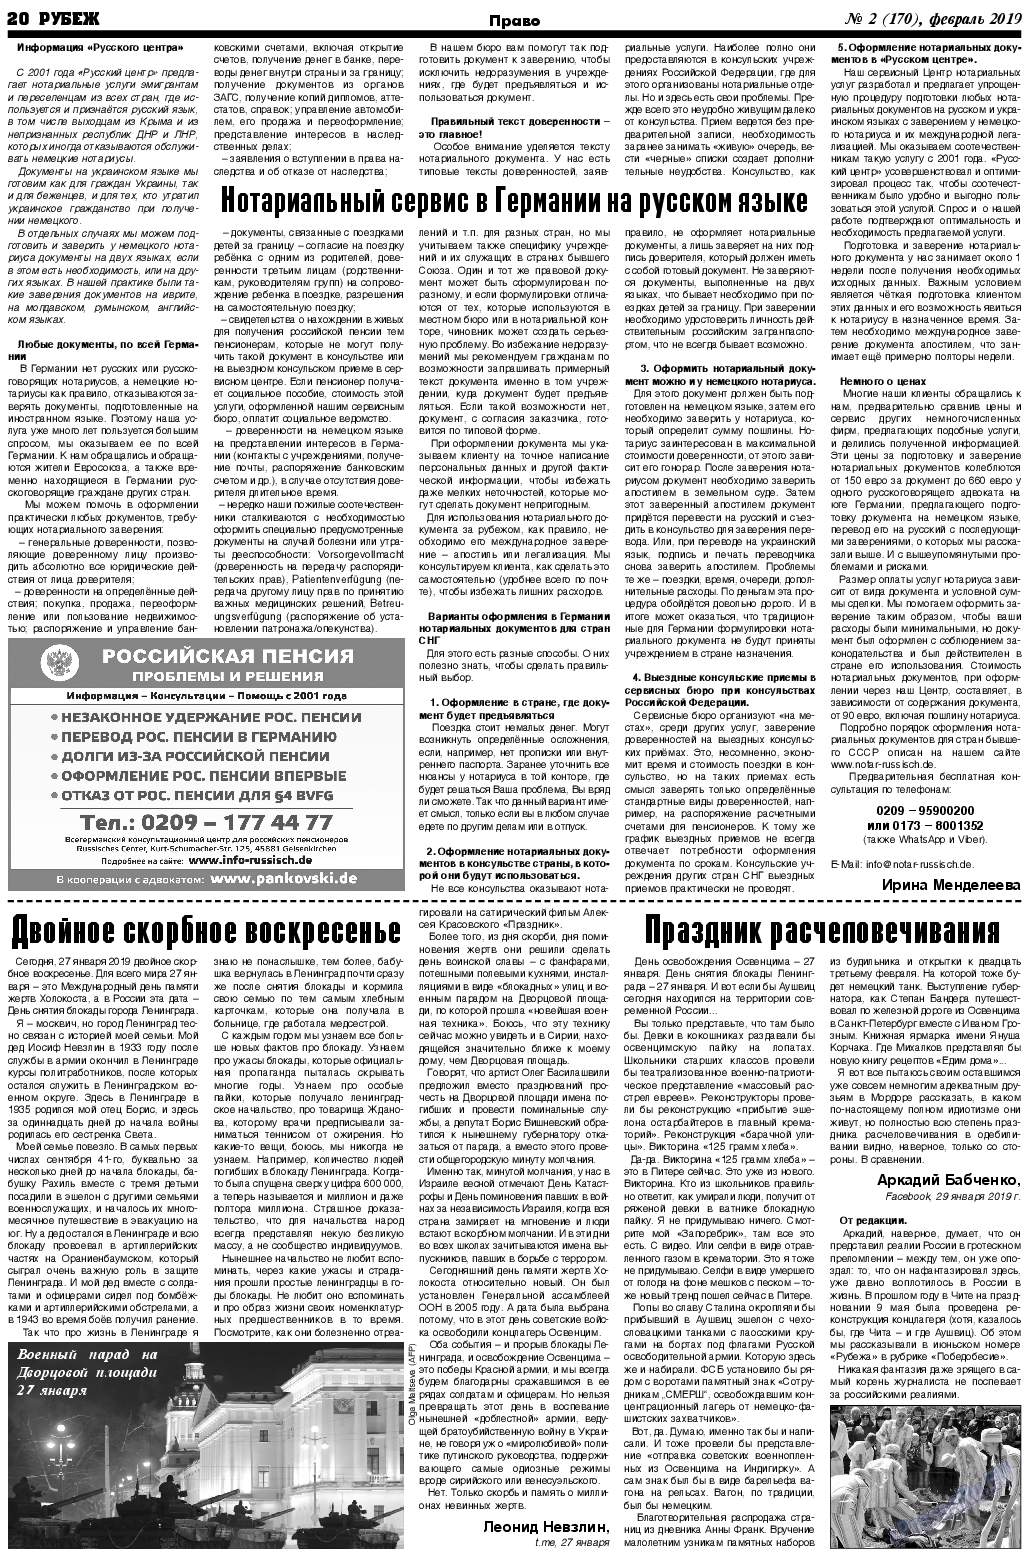 Рубеж, газета. 2019 №2 стр.20